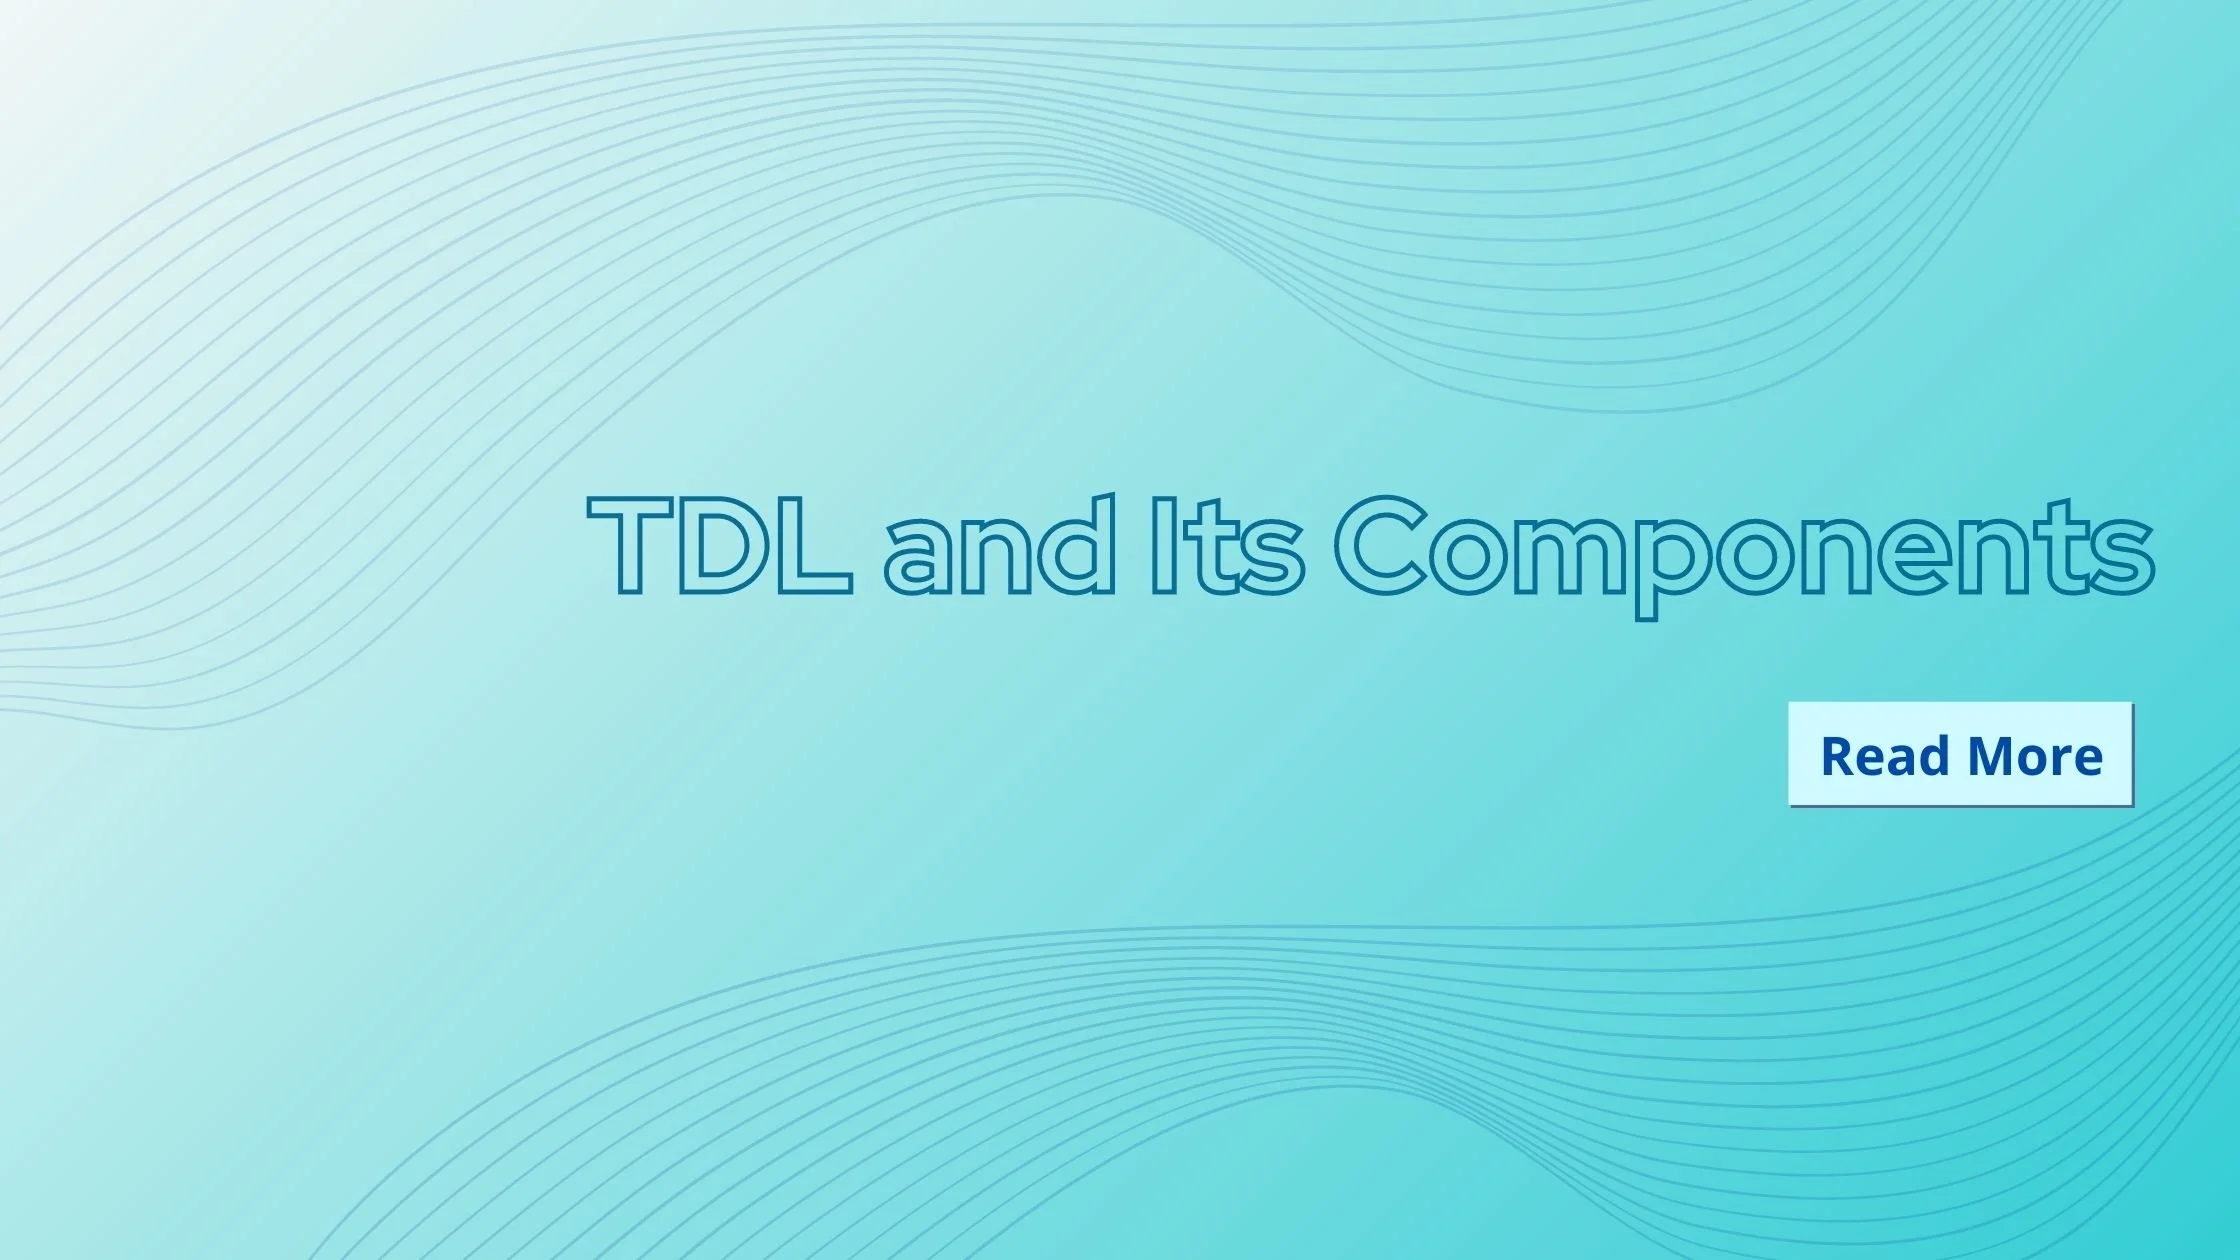 TDL components